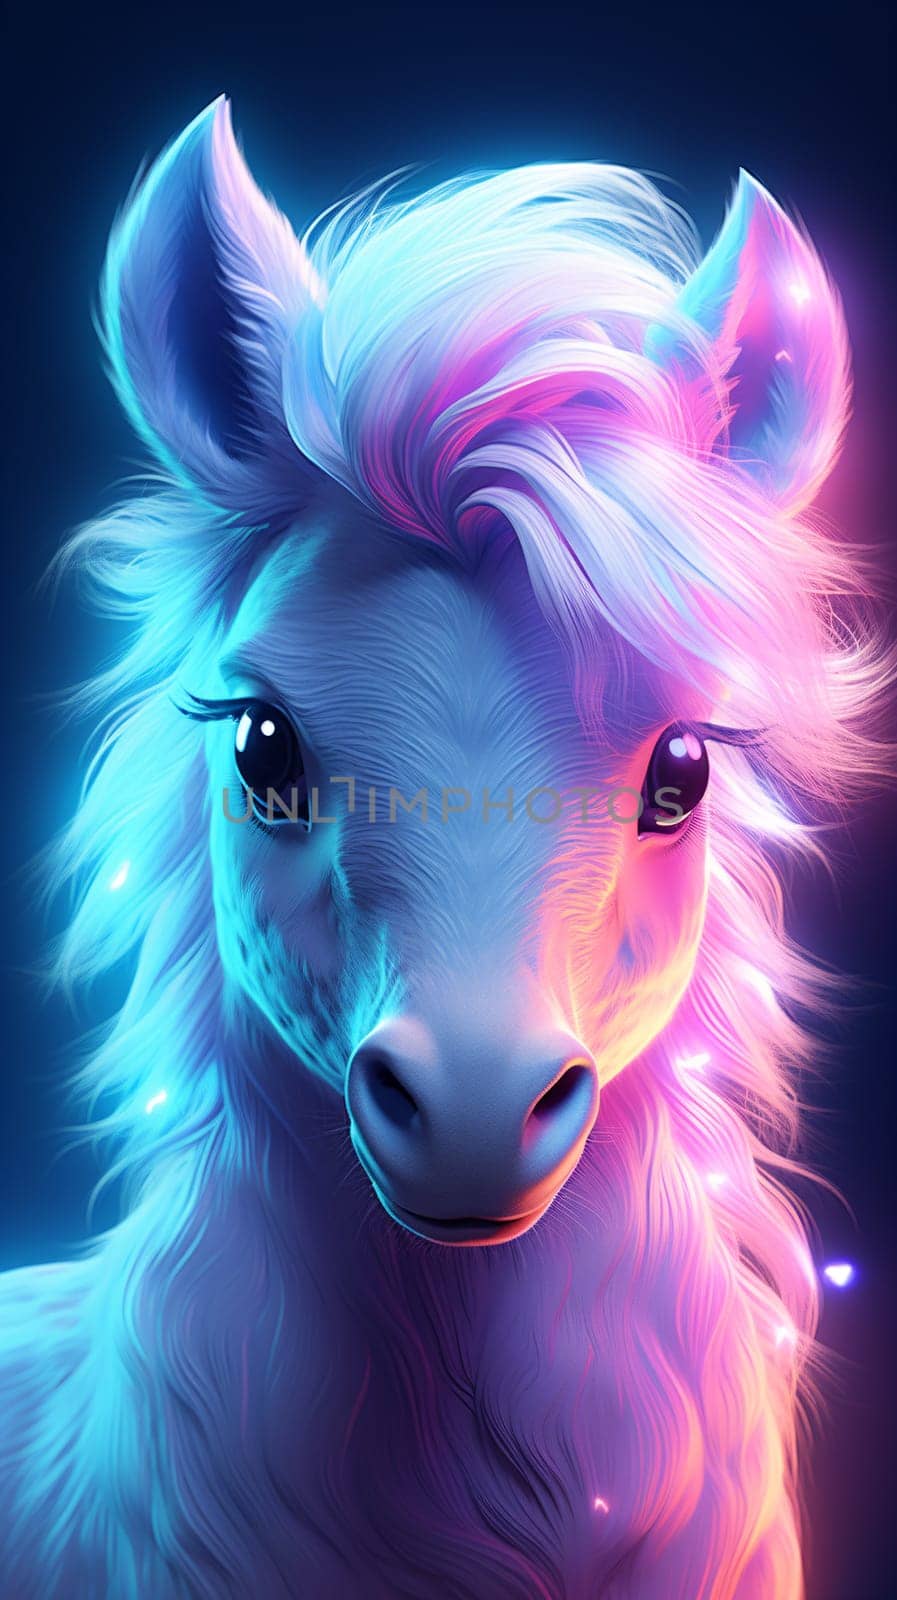 Neon Fantasy Horse Portrait by chrisroll